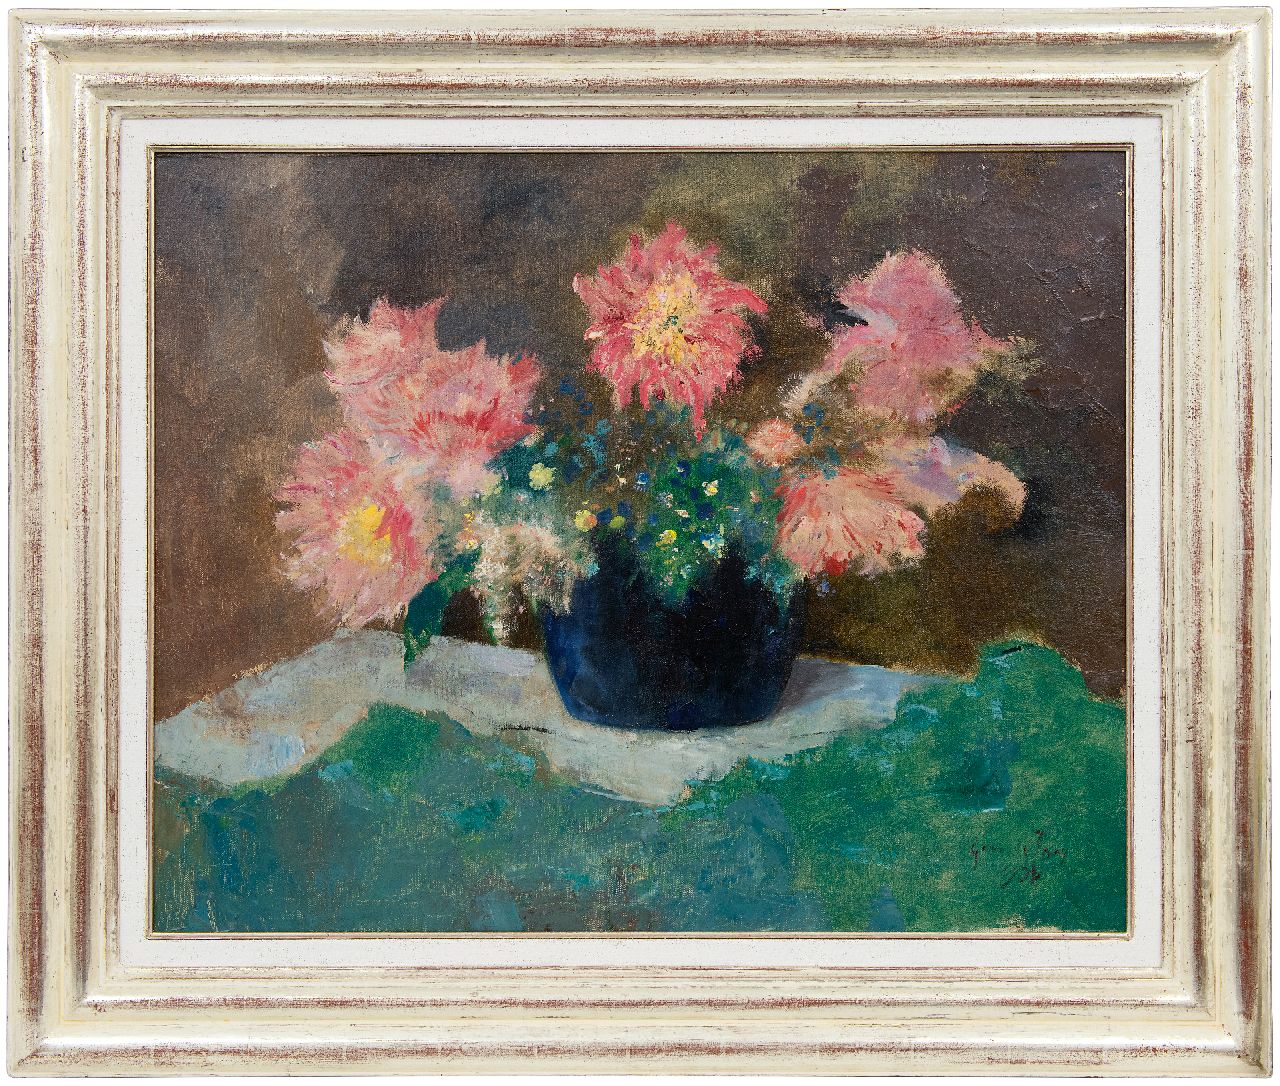 Jong G. de | Gerben 'Germ' de Jong, Flowers in a blue vase, oil on canvas 65.7 x 81.2 cm, signed l.r. and dated 1936